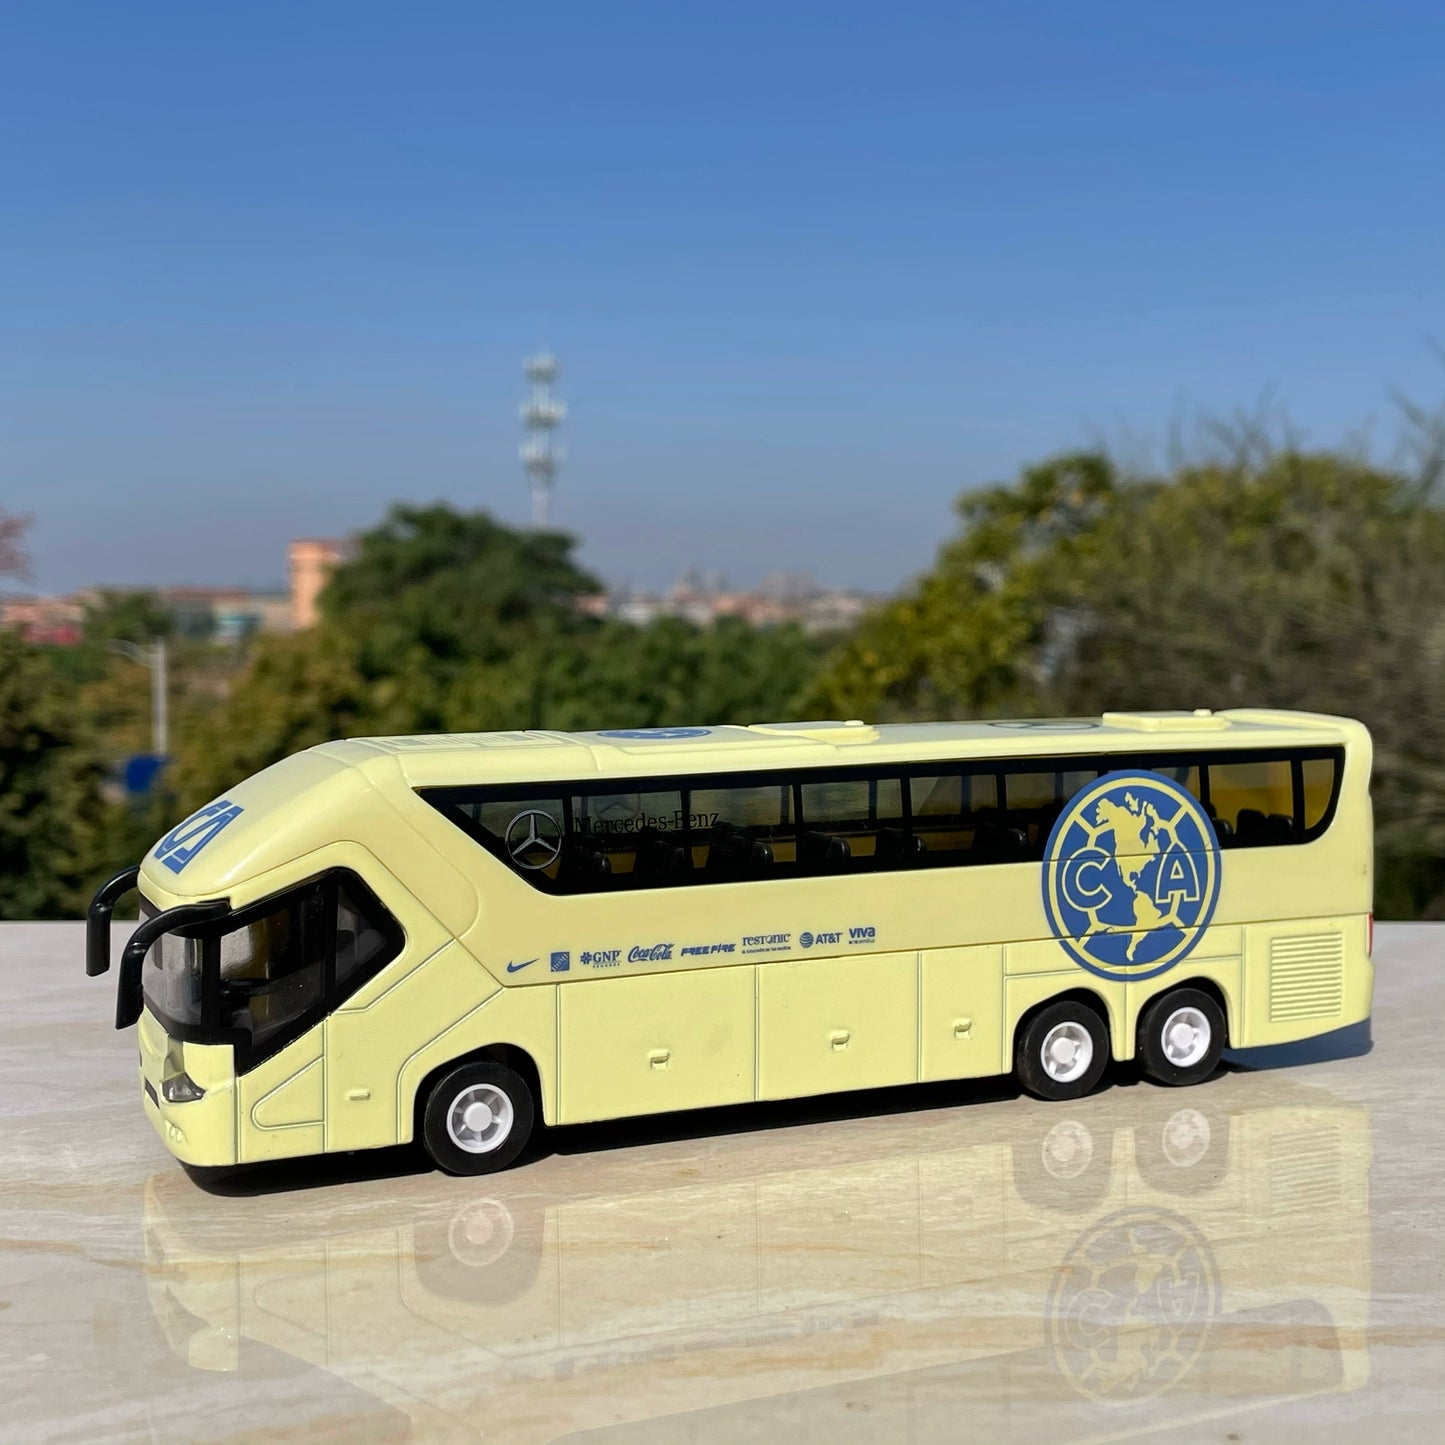 1/64 Scale World Soccer Club Coach Diecast Model Bus